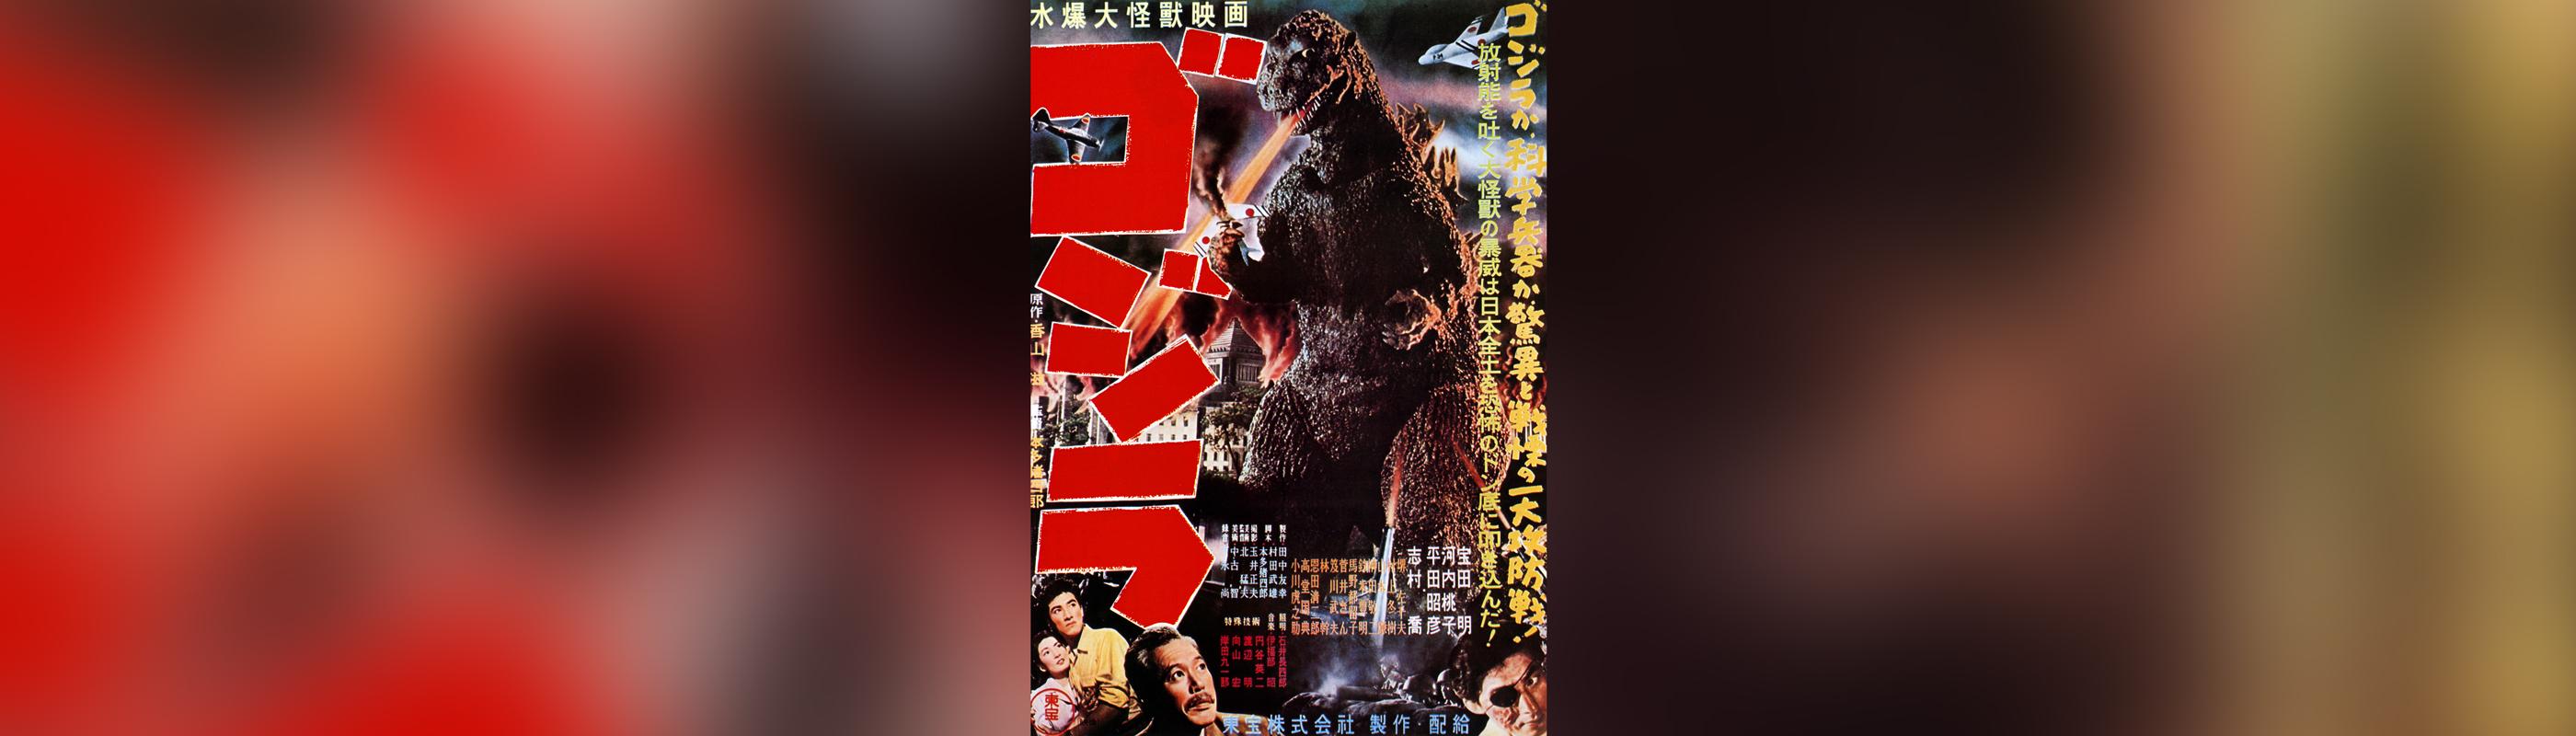 Gojira movie poster